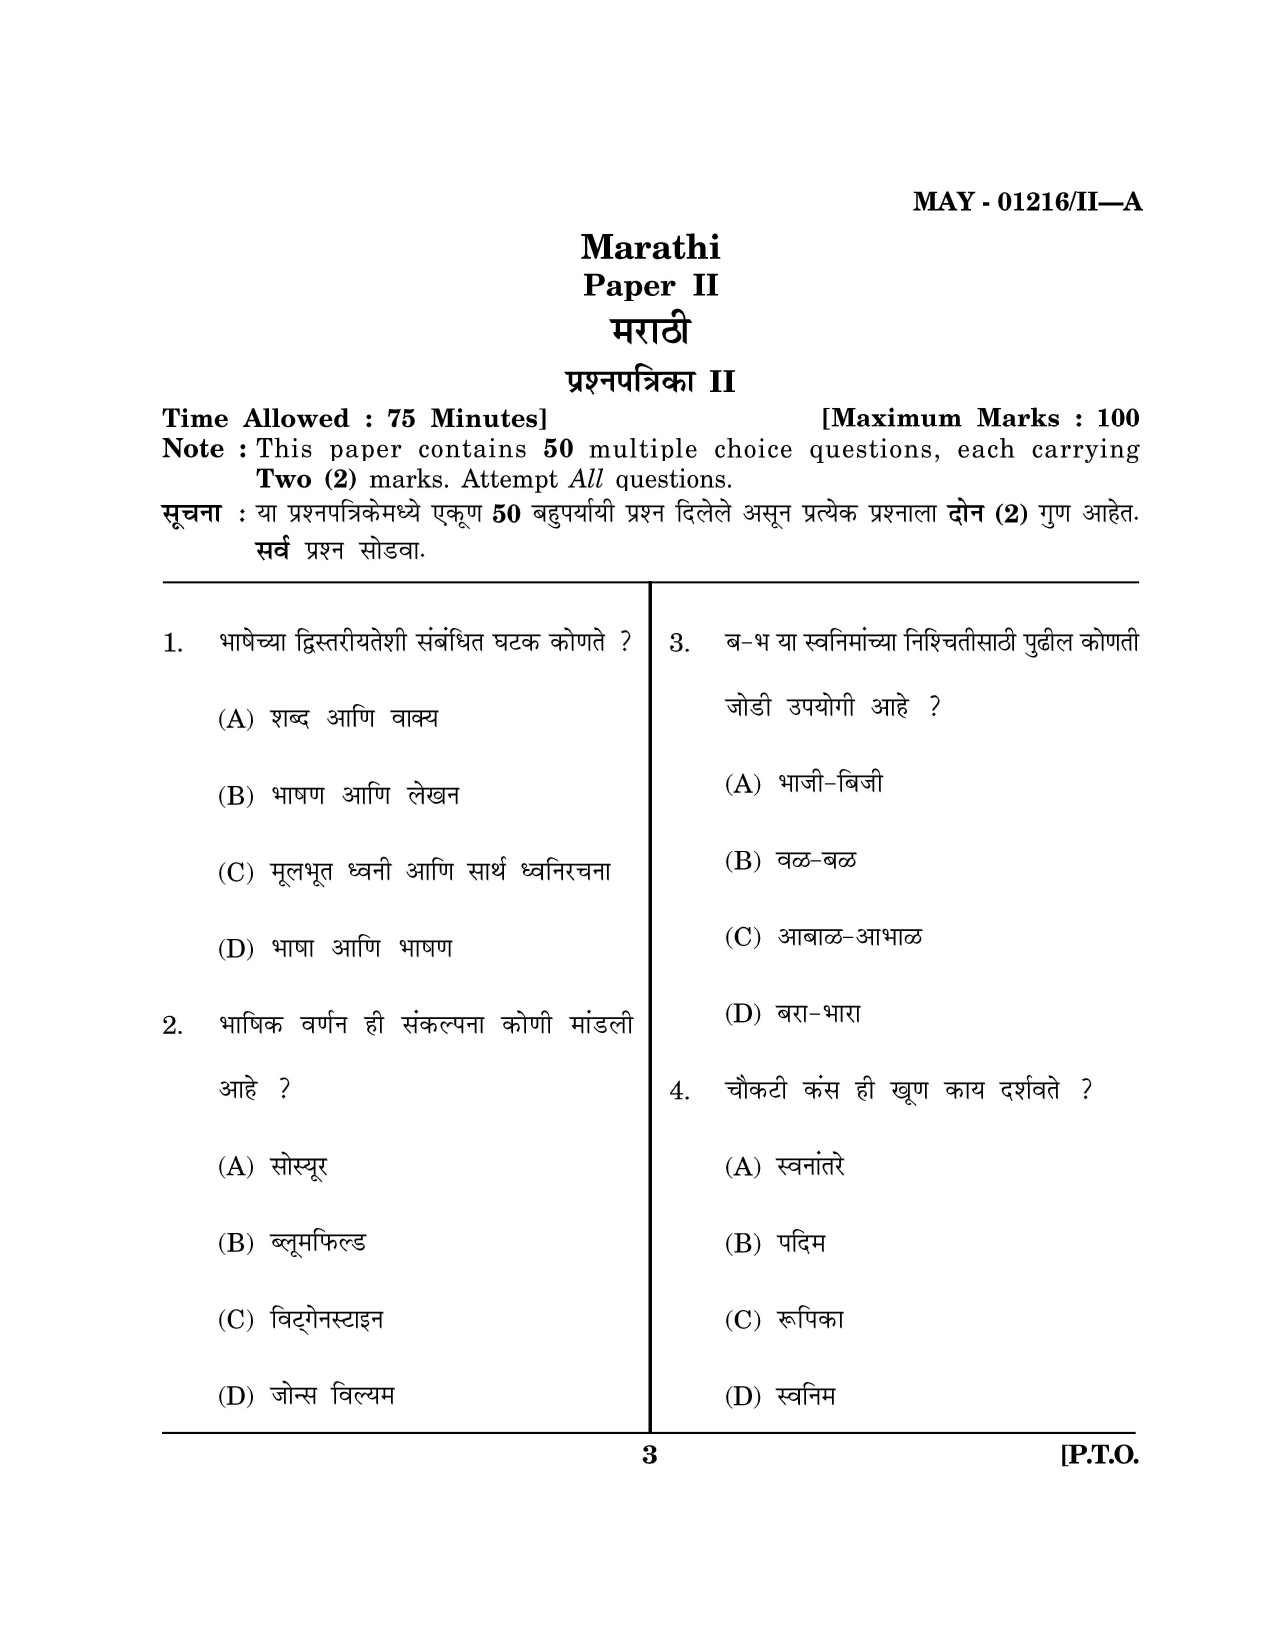 Maharashtra SET Marathi Question Paper II May 2016 2